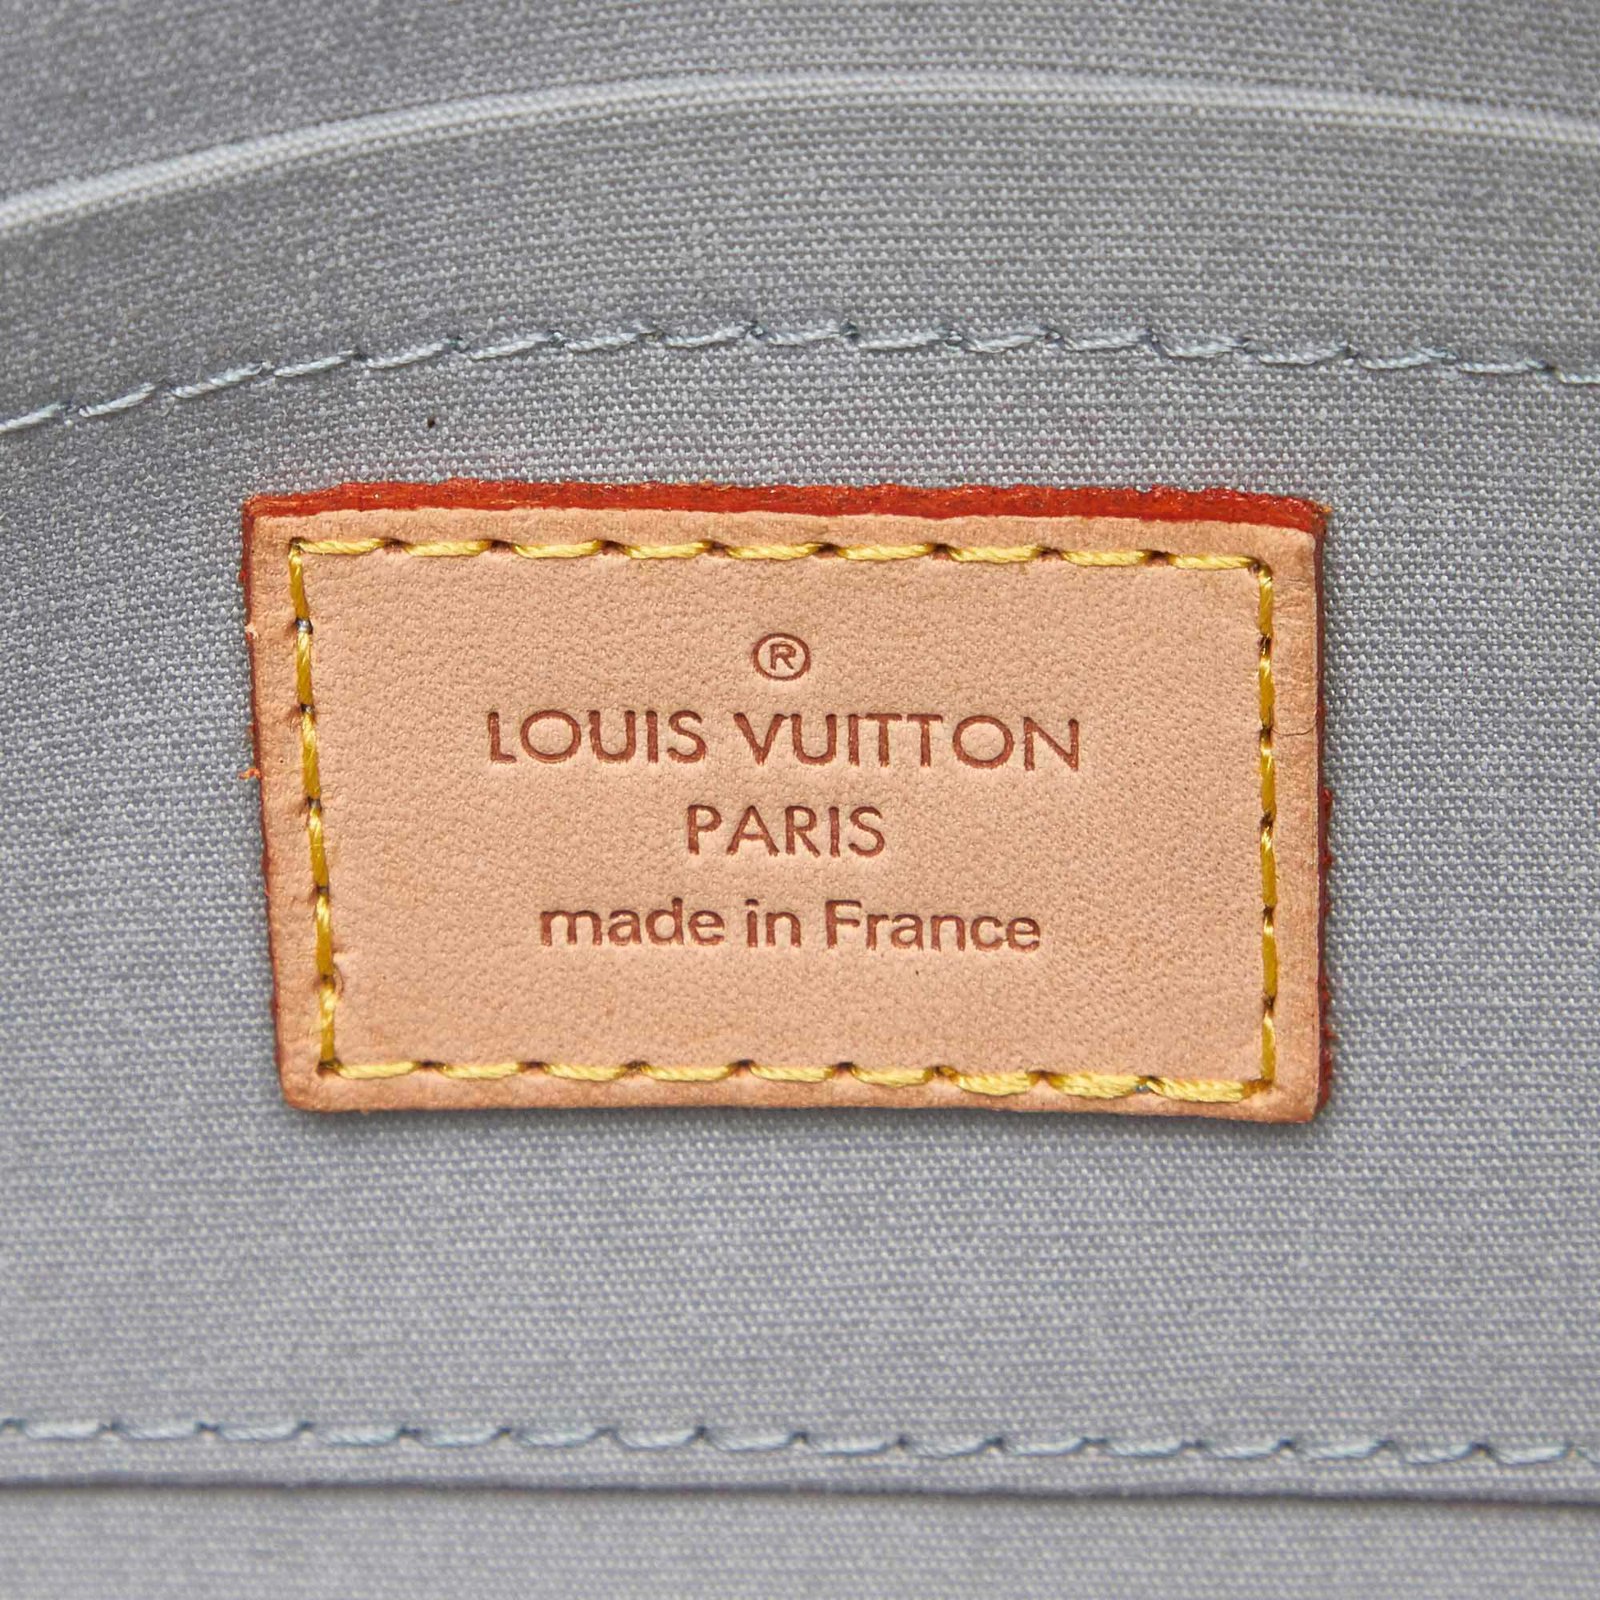 Malibu street patent leather handbag Louis Vuitton Pink in Patent leather -  28101277